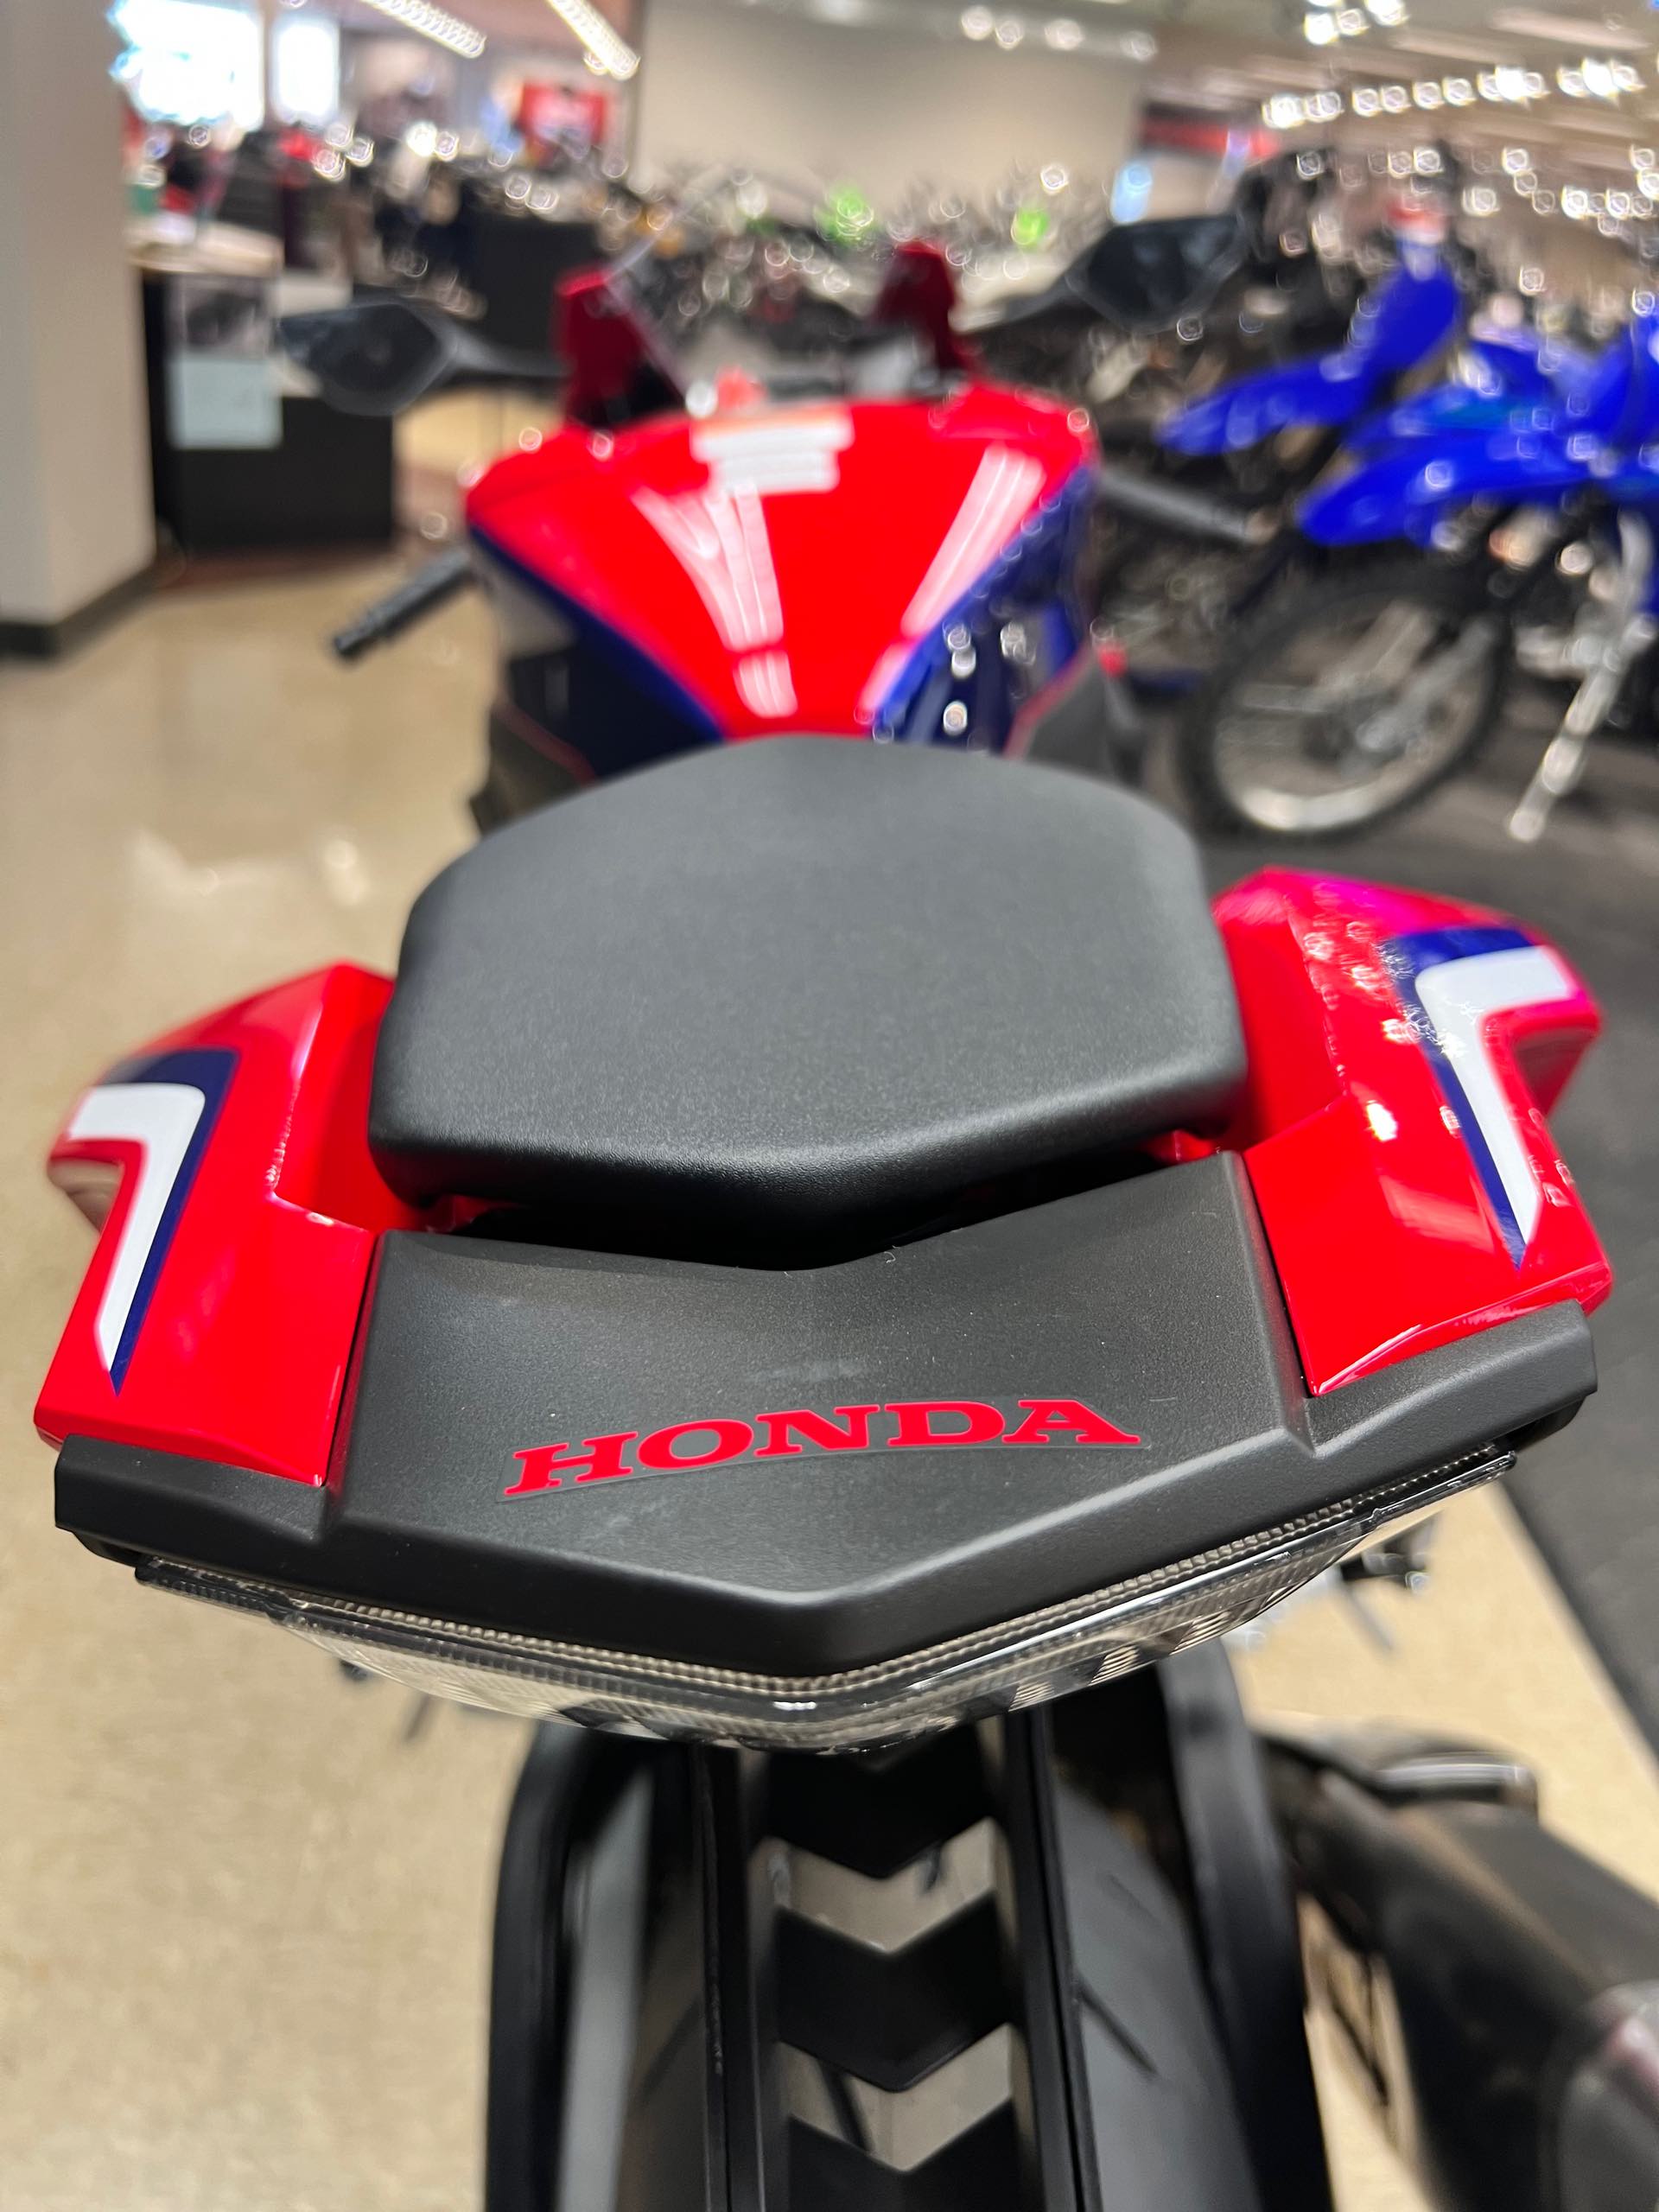 2024 Honda CBR1000RR ABS at Sloans Motorcycle ATV, Murfreesboro, TN, 37129